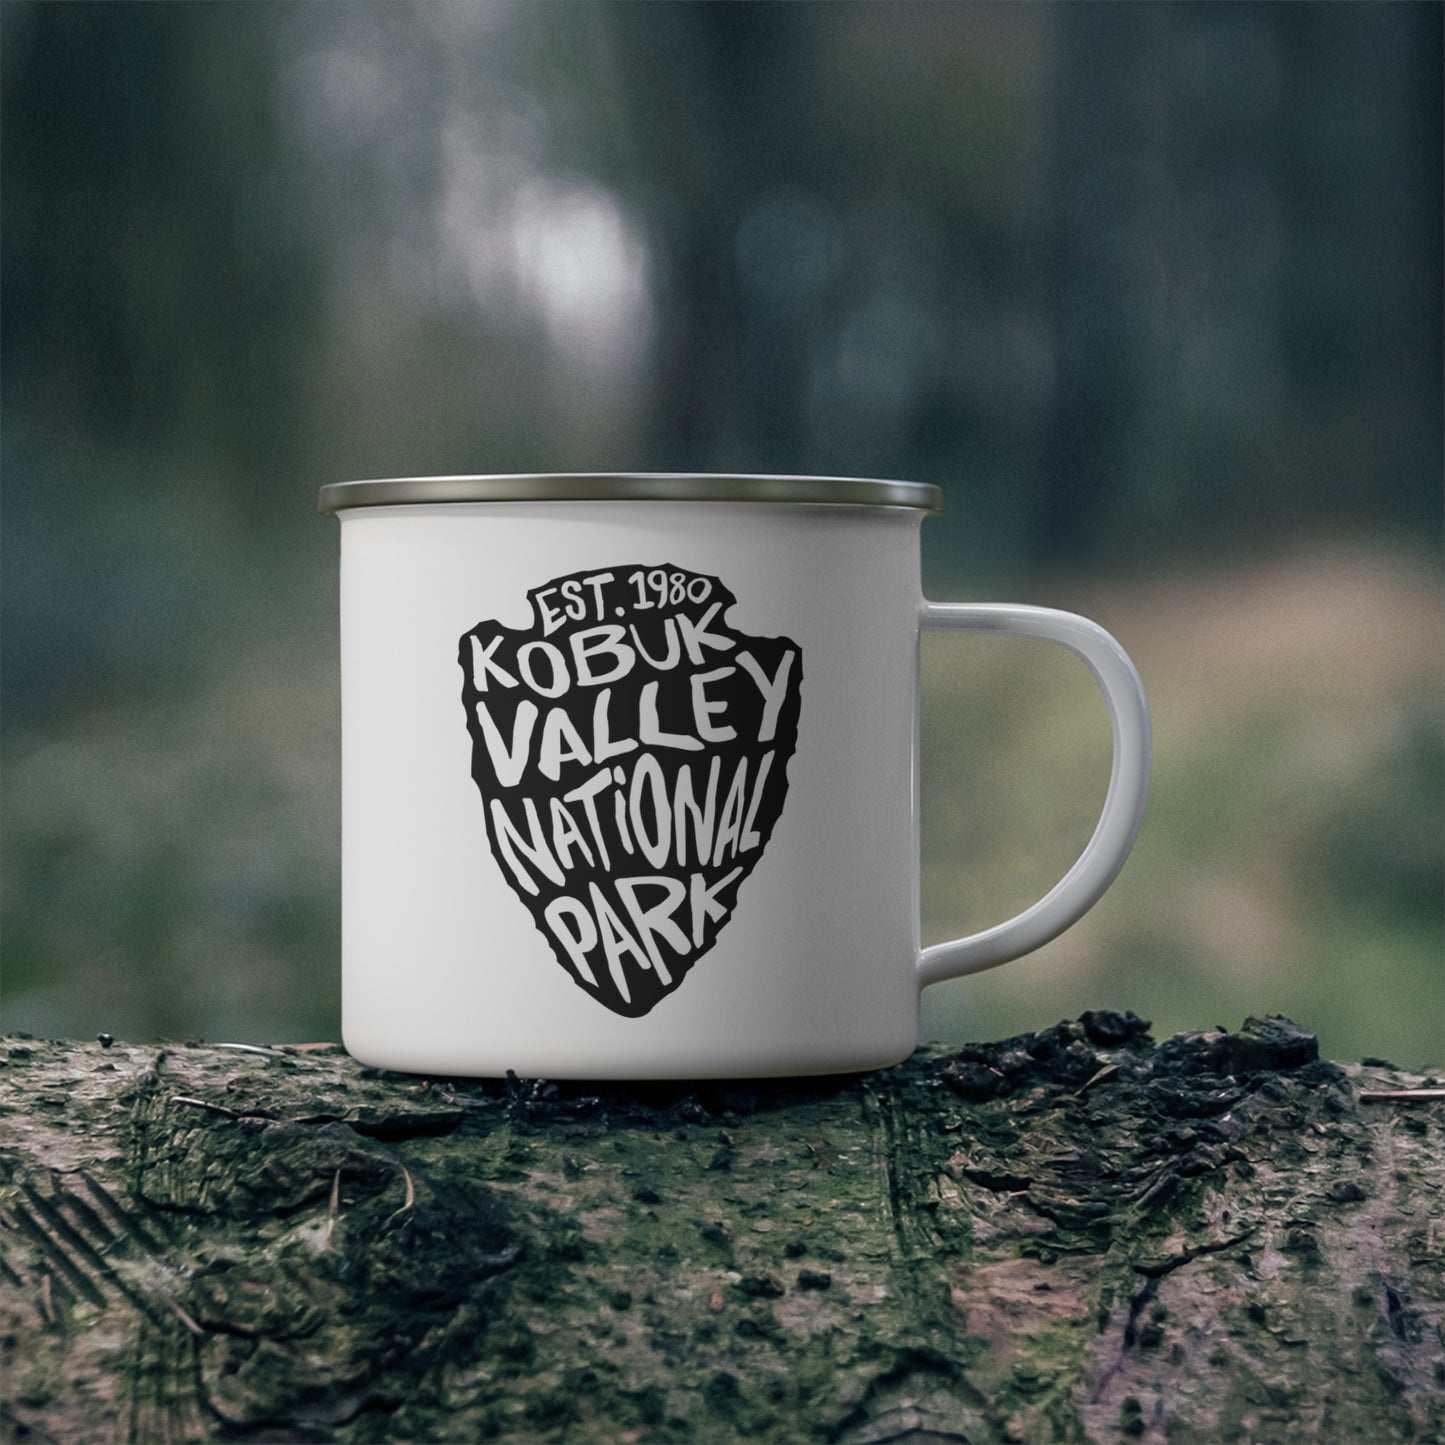 Kobuk Valley National Park Enamel Camping Mug - Arrowhead